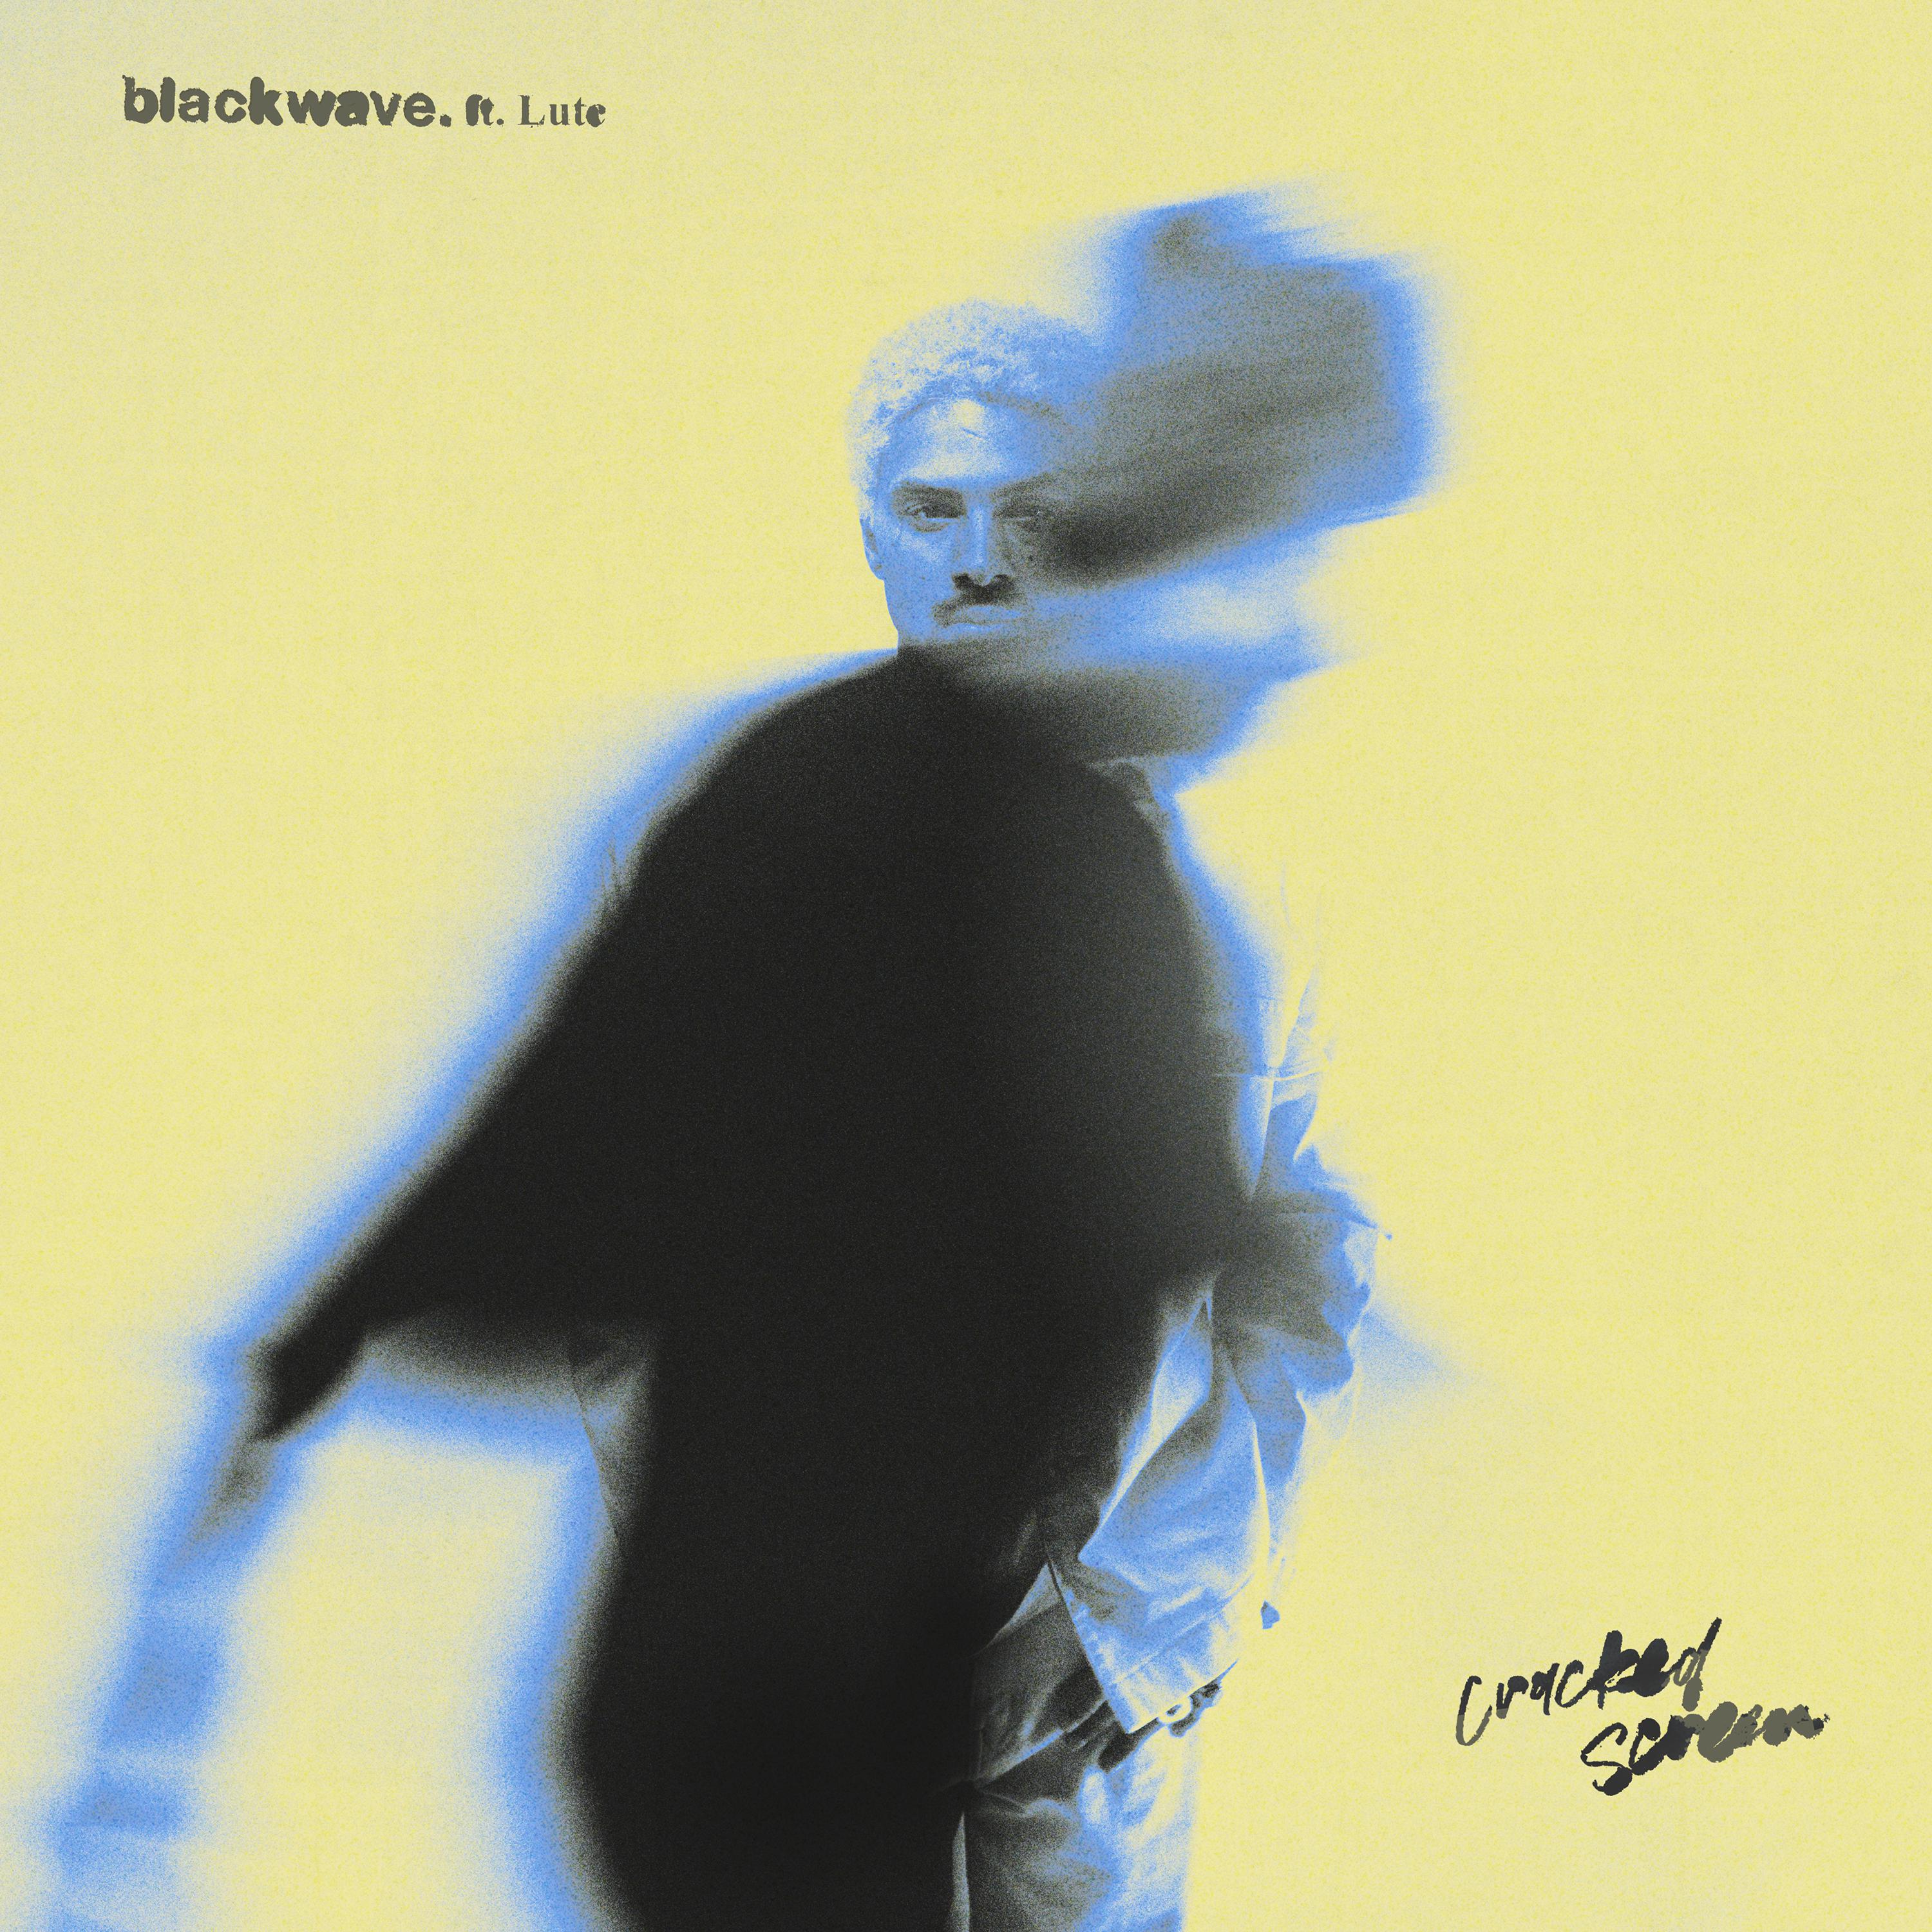 blackwave. - cracked screen